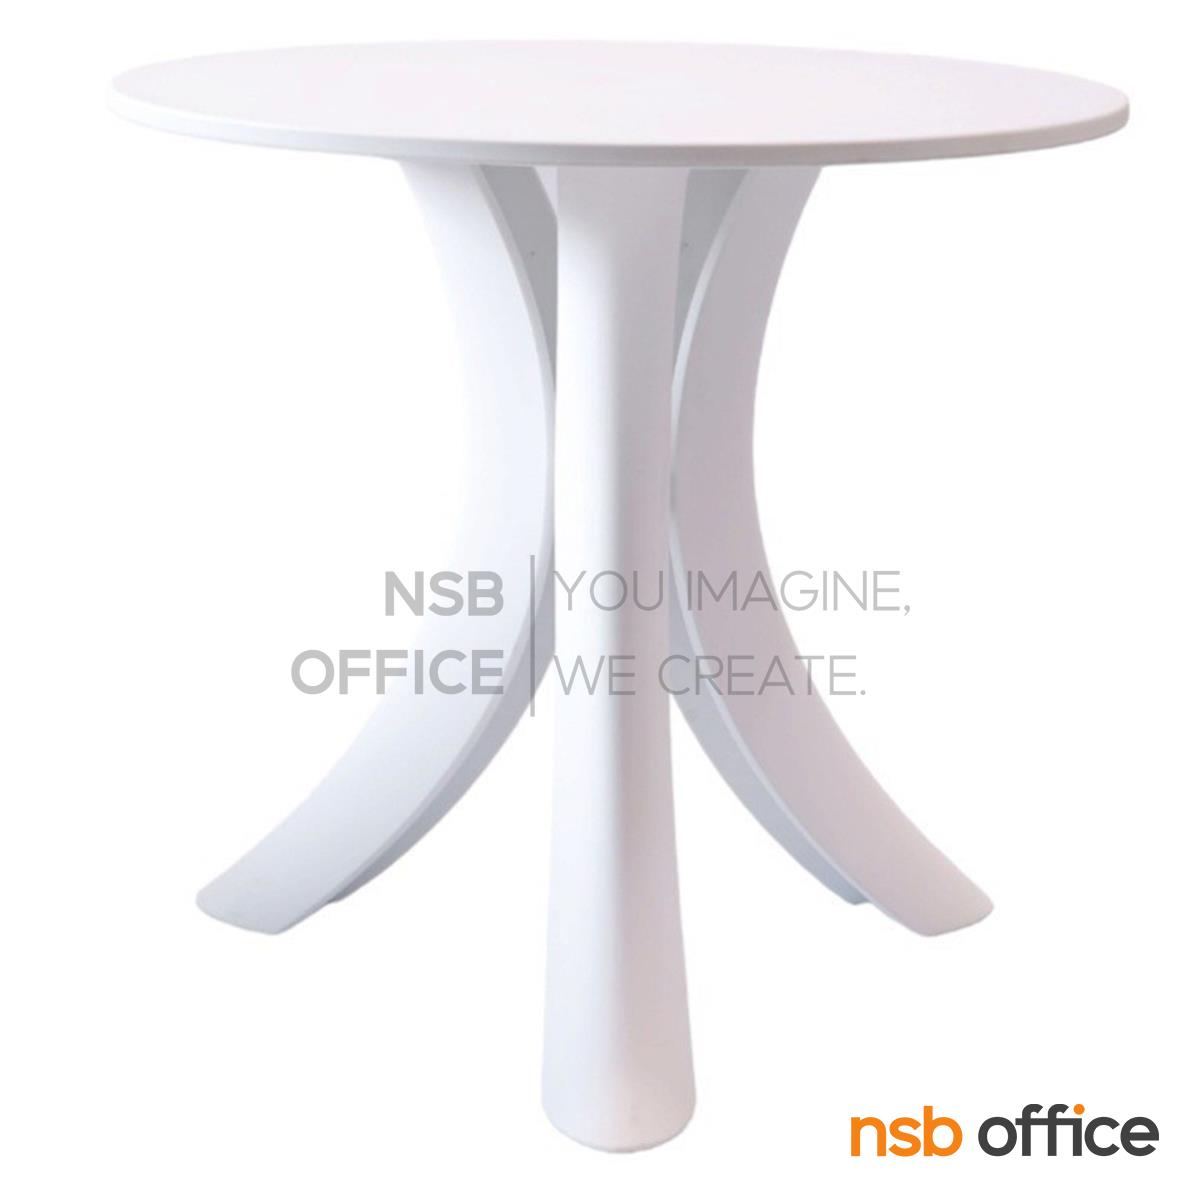 A19A055:โต๊ะหน้าพลาสติก(ABS)  รุ่น Nami (นามิ) ขนาด 60W cm.  ขาพลาสติก